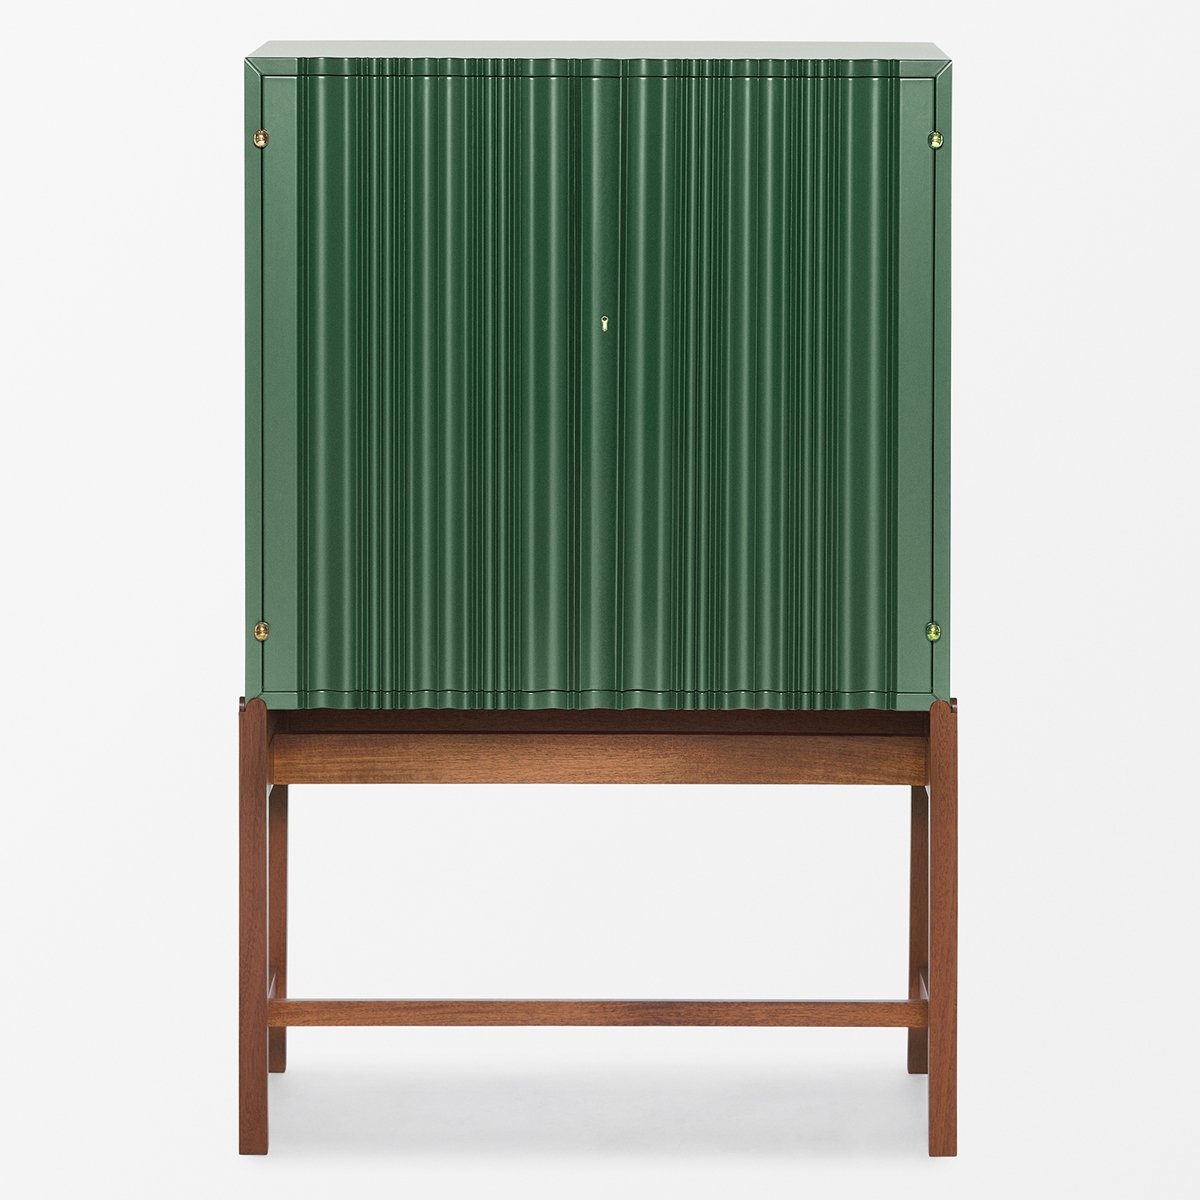 Cabinet 2192 - Svenskt Tenn Online - Width 80 cm, Height 125 cm, Green, Josef Frank